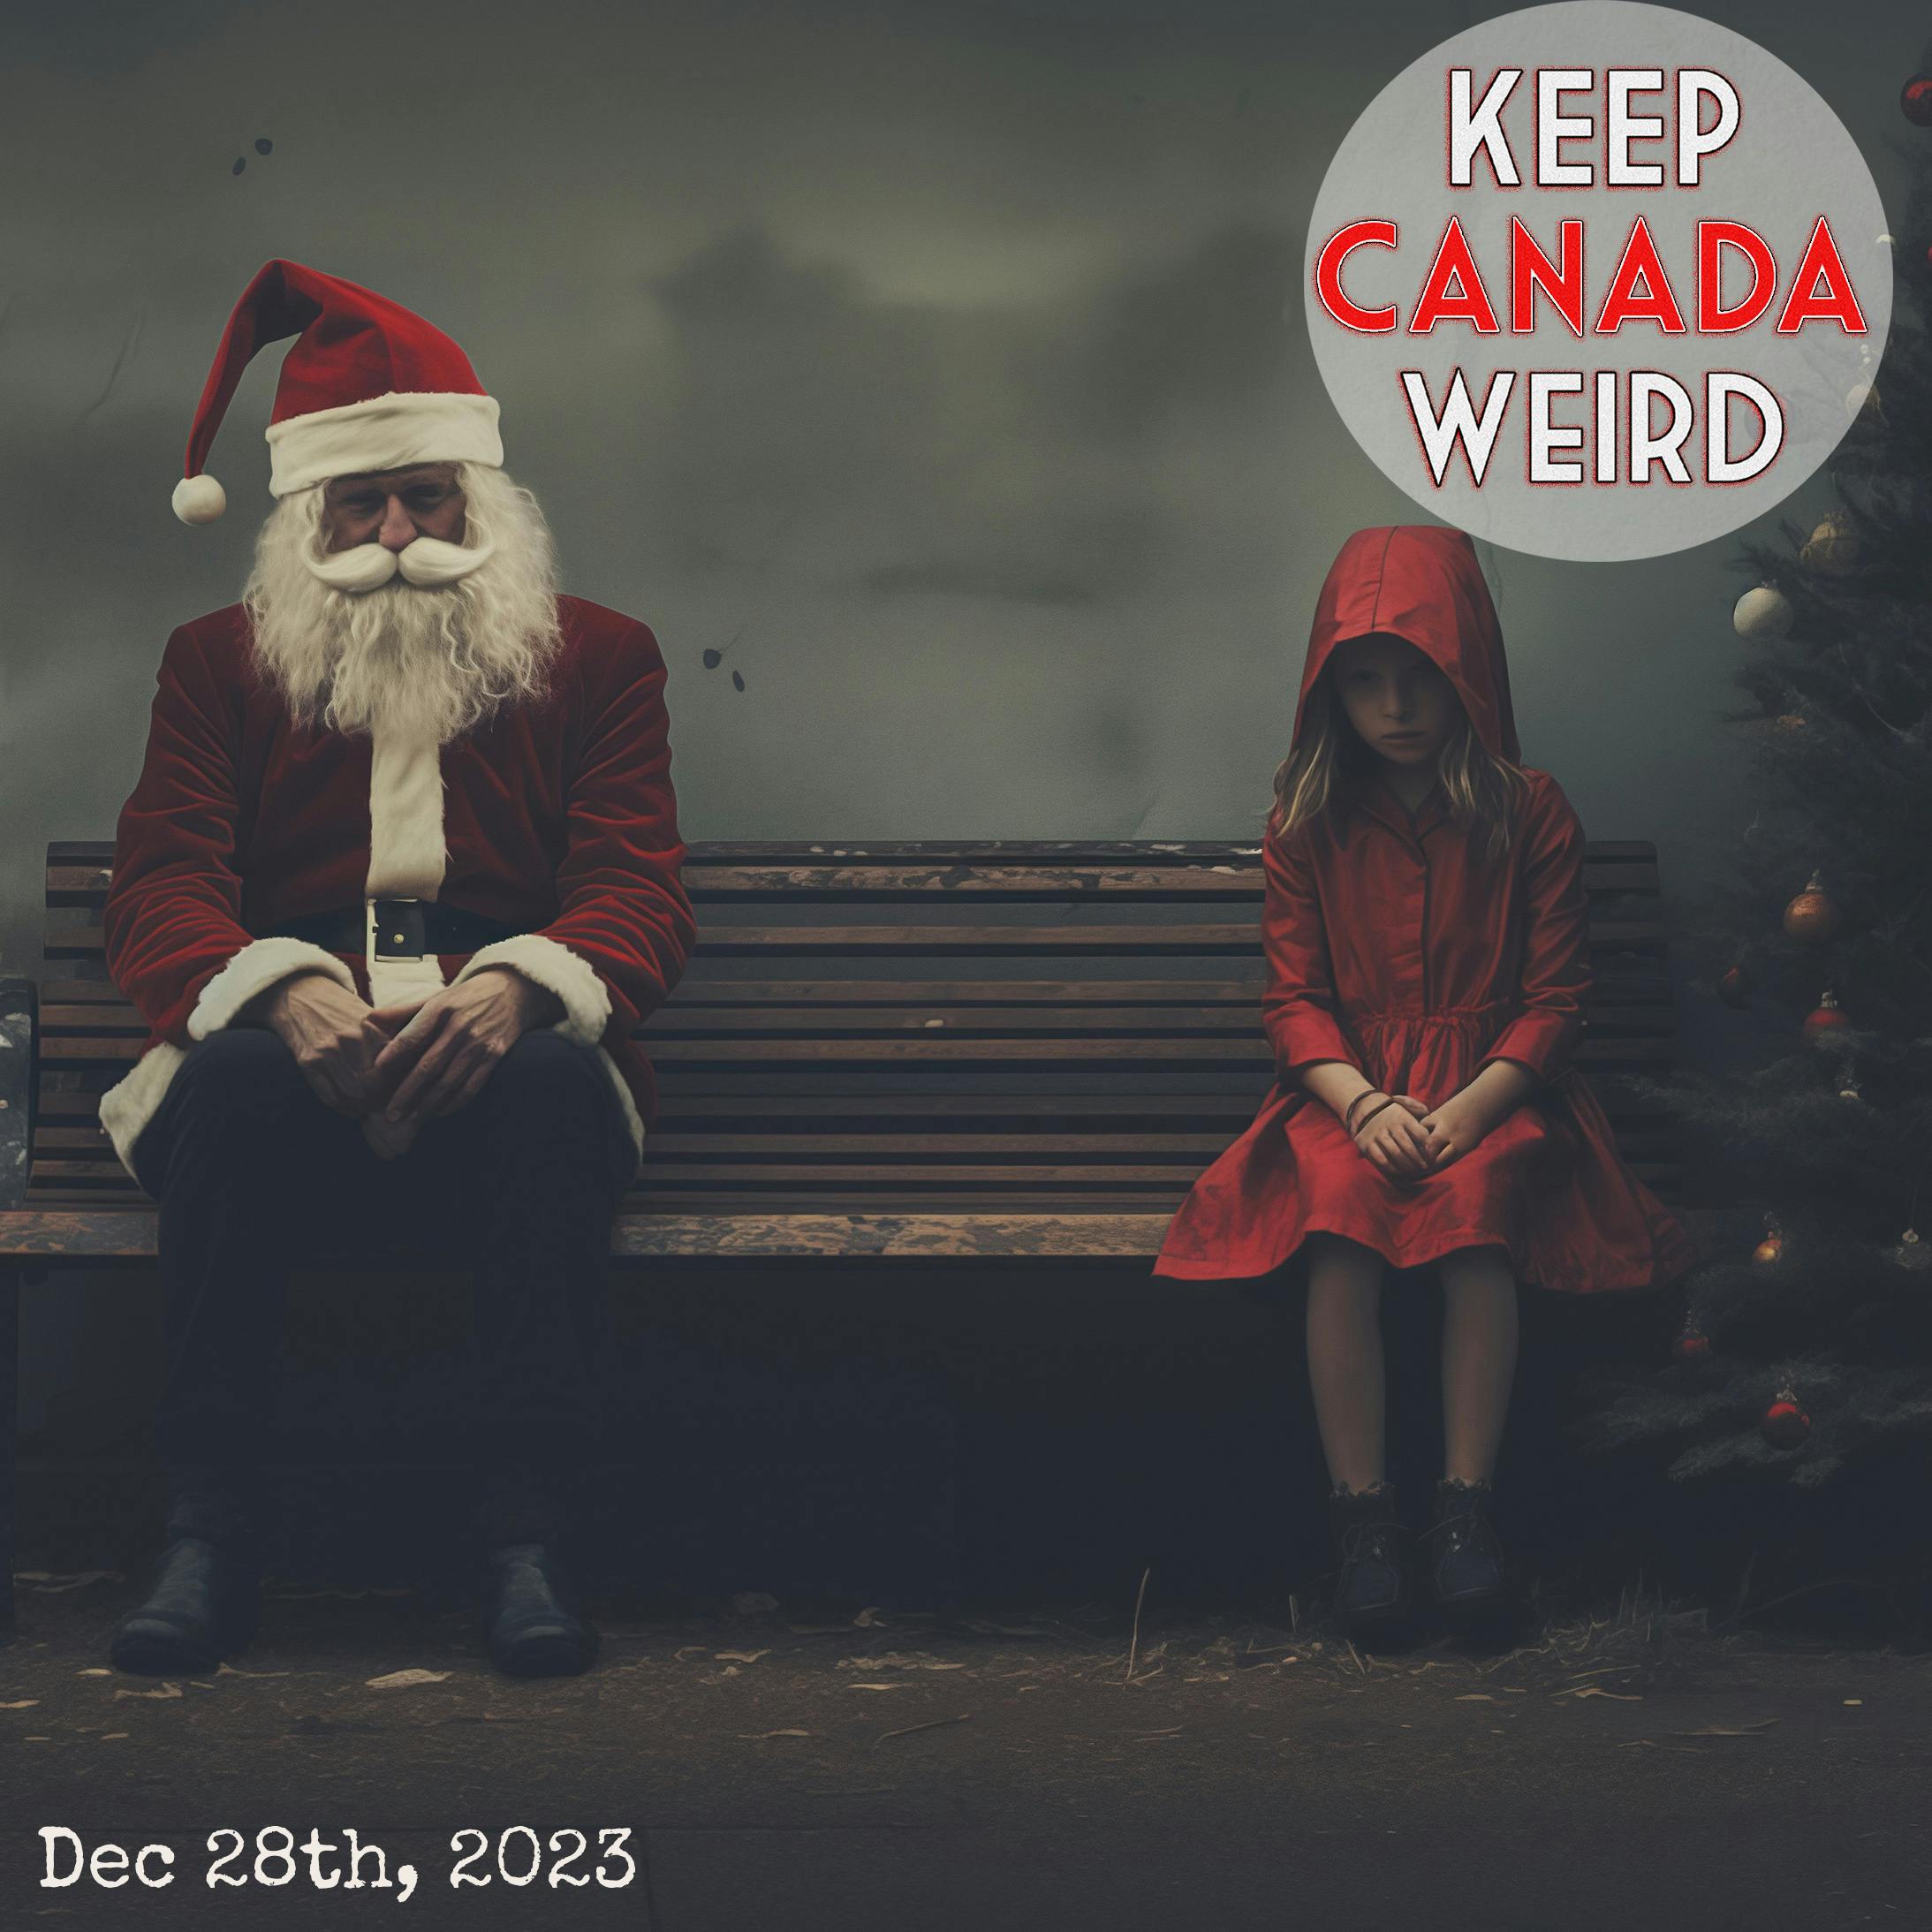 KEEP CANADA WEIRD - Dec 28th, 2023 - Bad Christmas stories, stolen coats, thrown vomit, and Santa's 